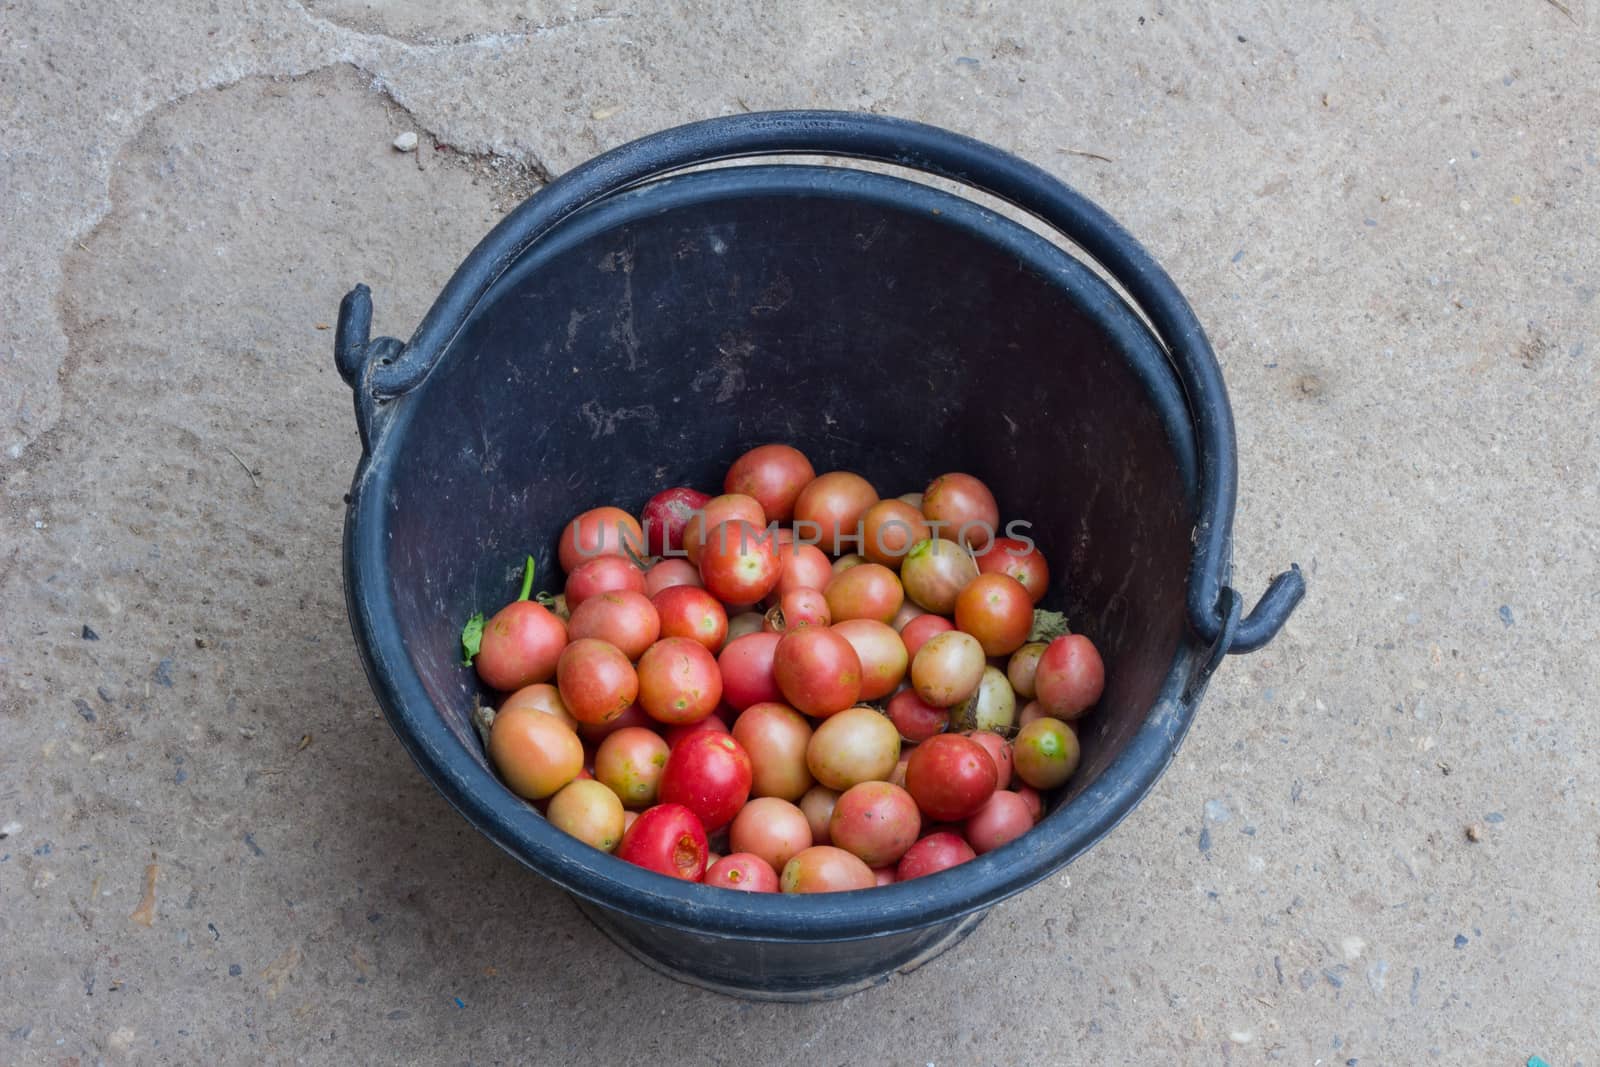 tomatoes in black bucket on floor of concrete